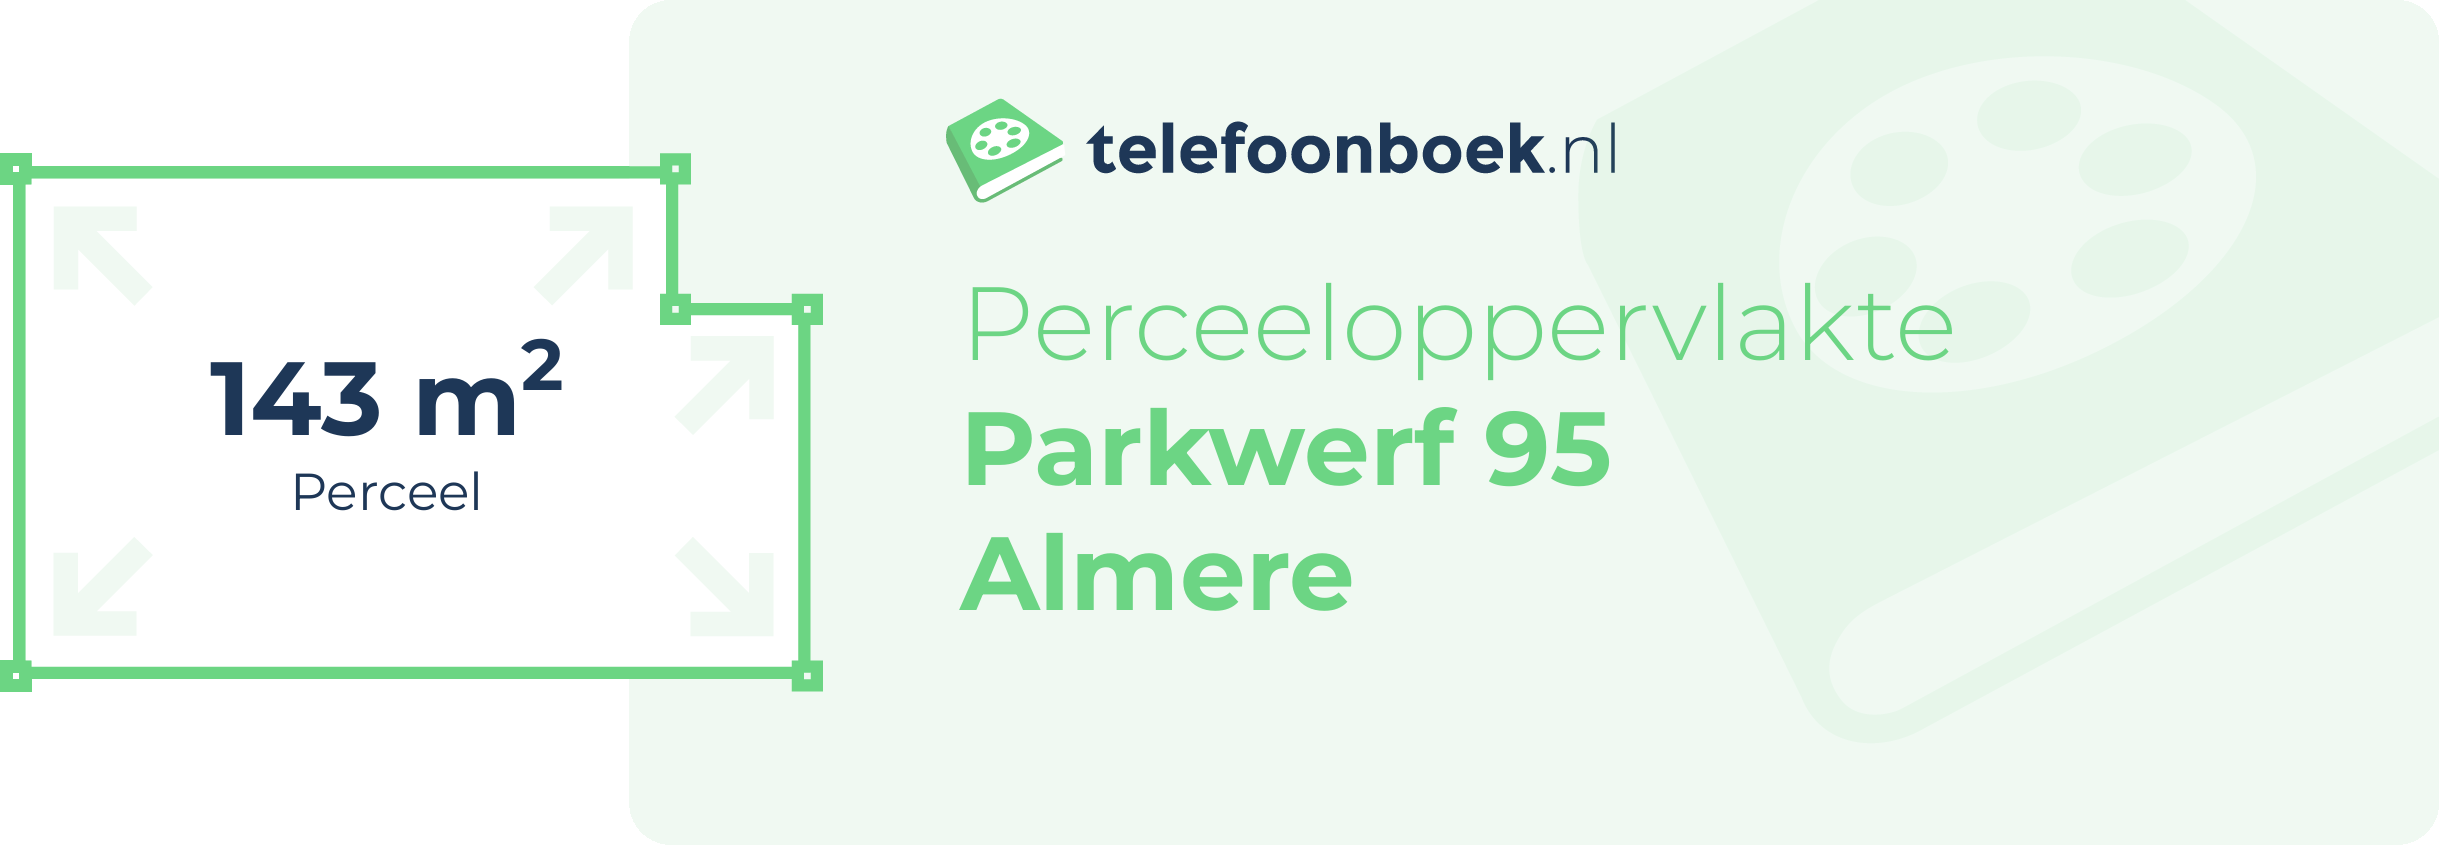 Perceeloppervlakte Parkwerf 95 Almere